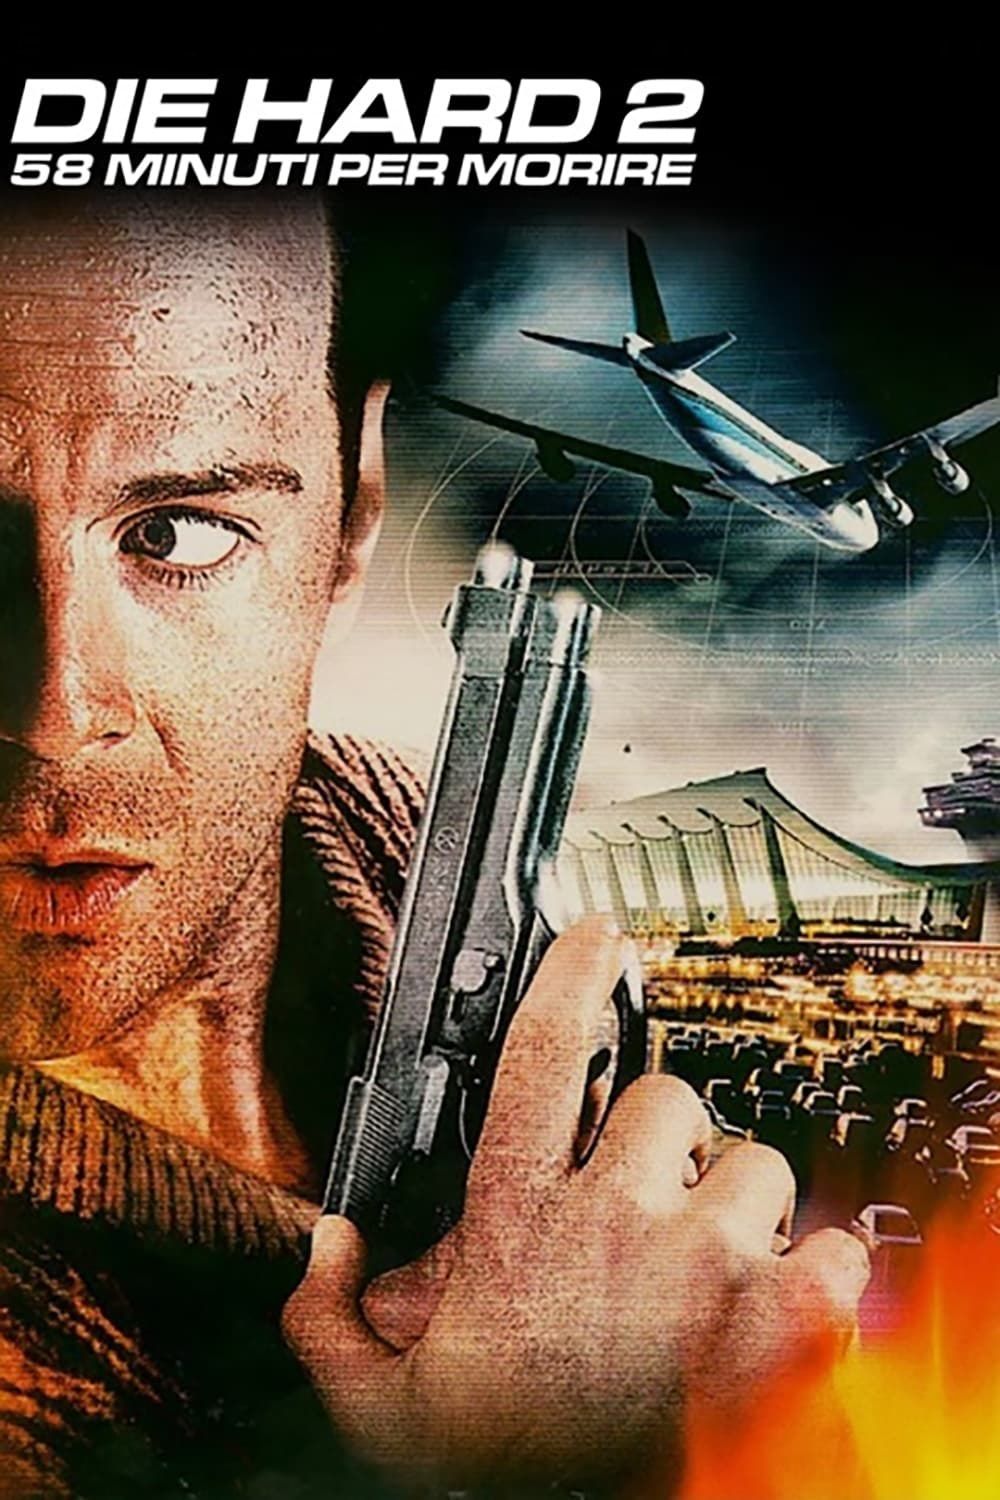 Copertina Film Die Hard 2: 58 minuti per morire Streaming FULL HD 